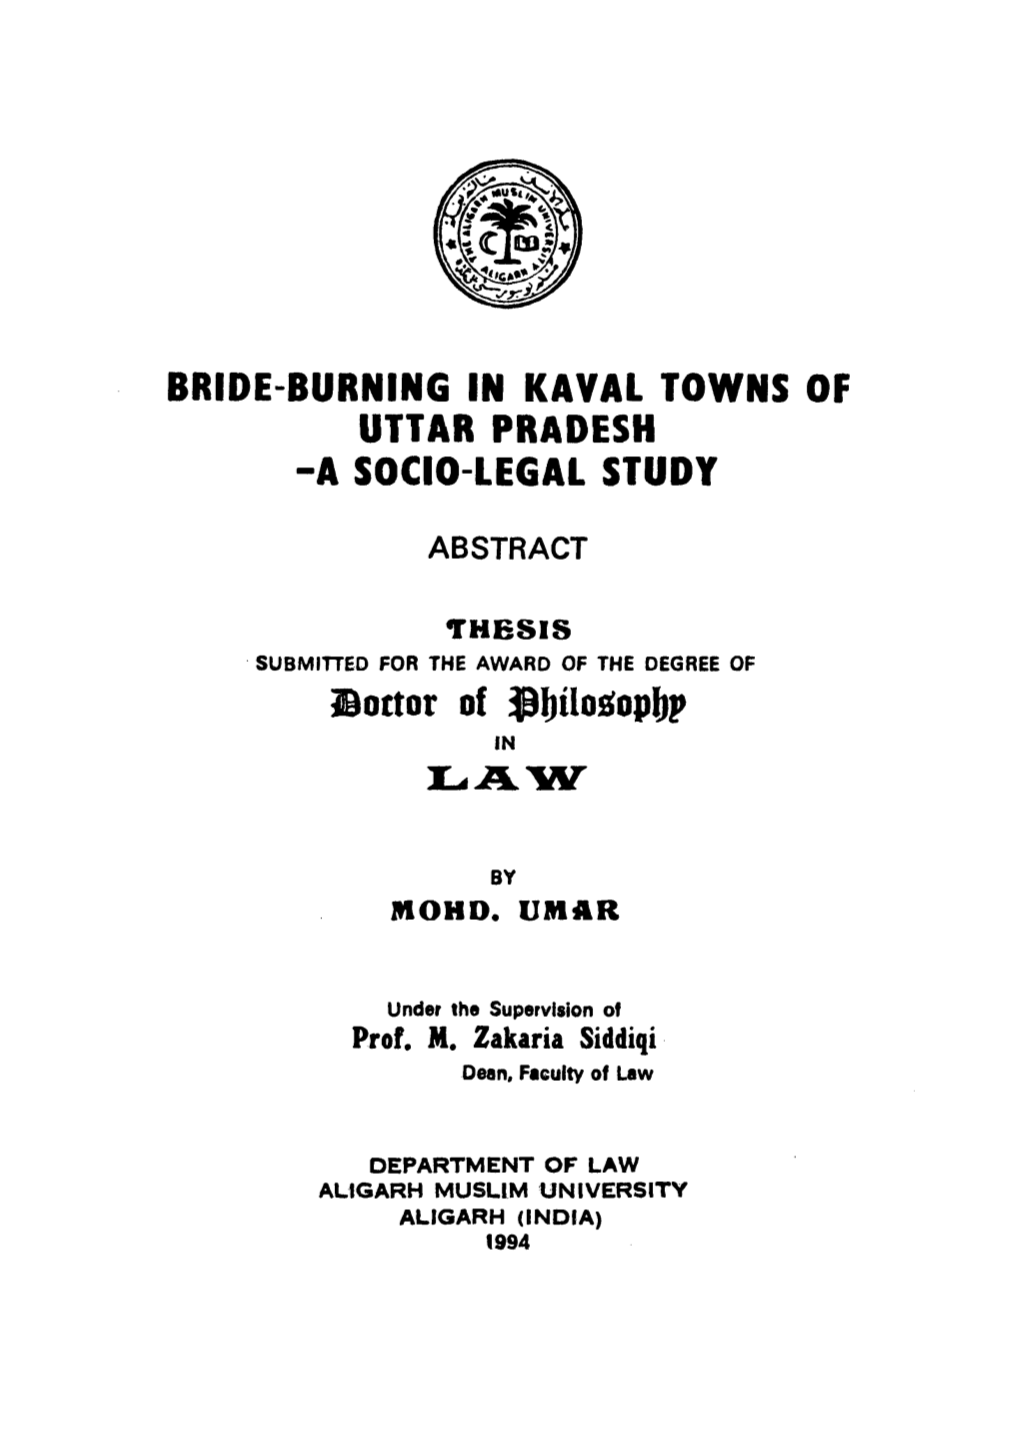 Bride-Burning in Kaval Towns of Uttar Pradesh -A Socio-Legal Study